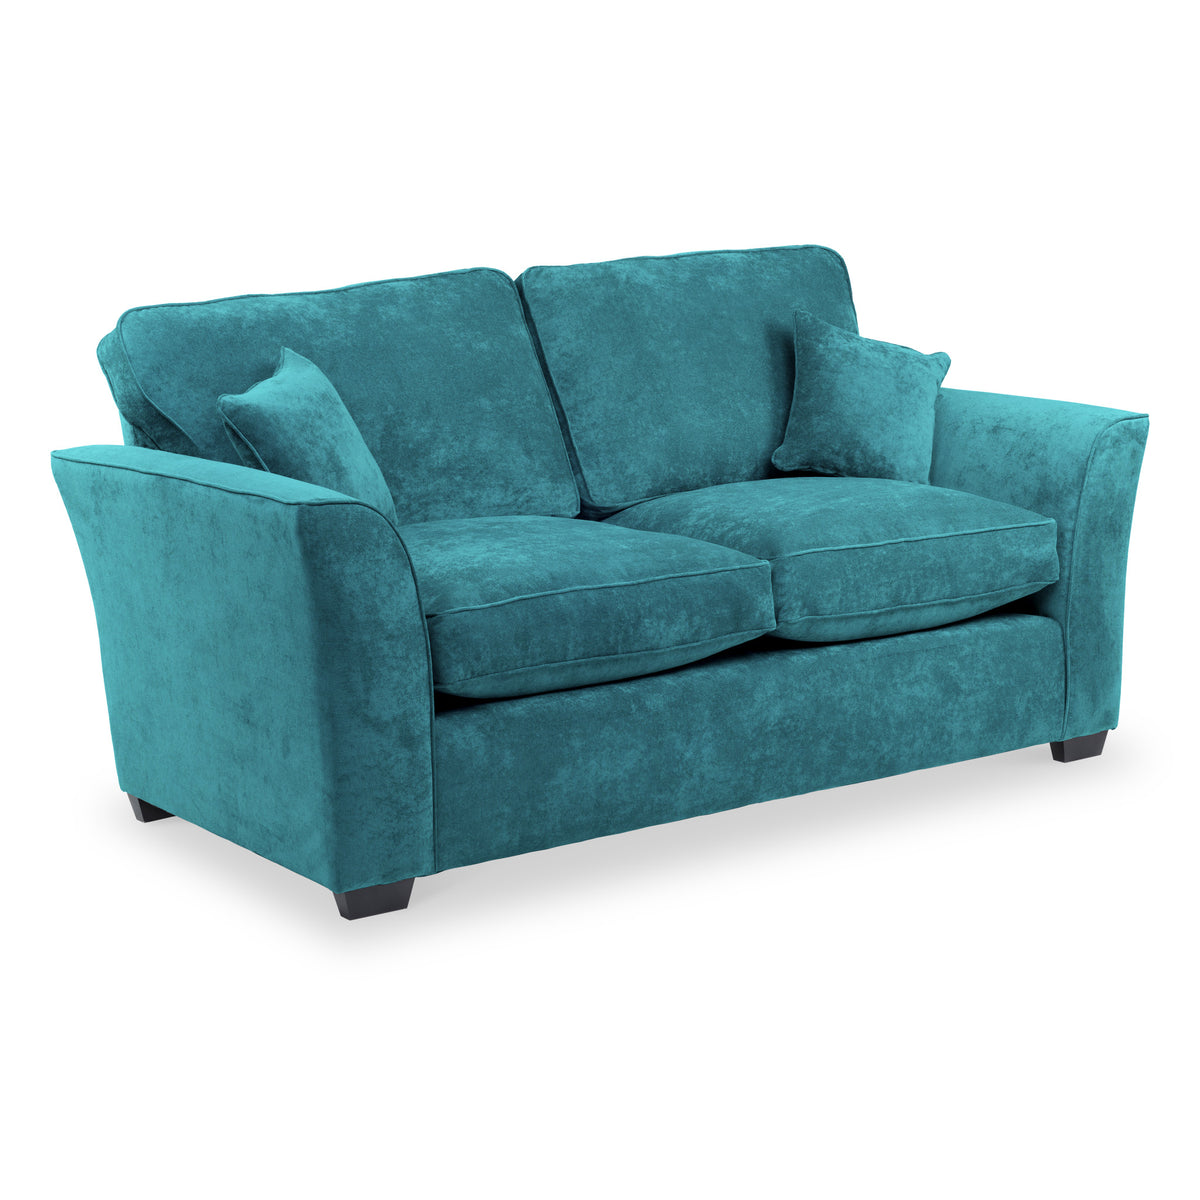 Padstow 3 Seater Emerald Roseland Furniture